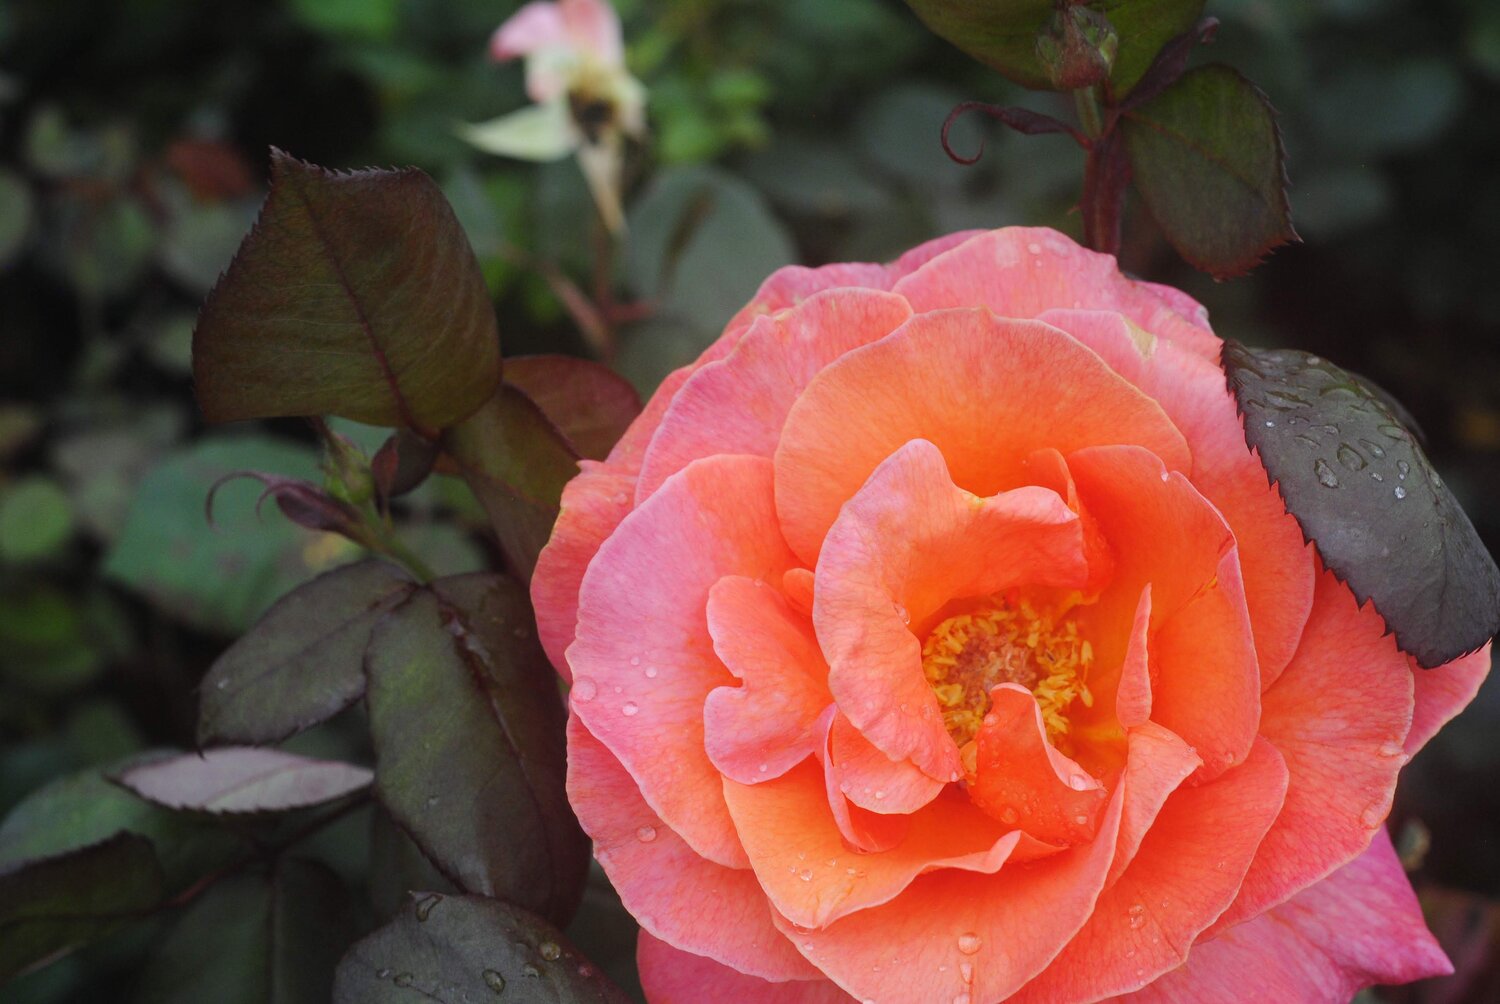 Heirloom Roses - Fire 'N' Ice Floribunda Rose Plant - Red Rose Bushes 